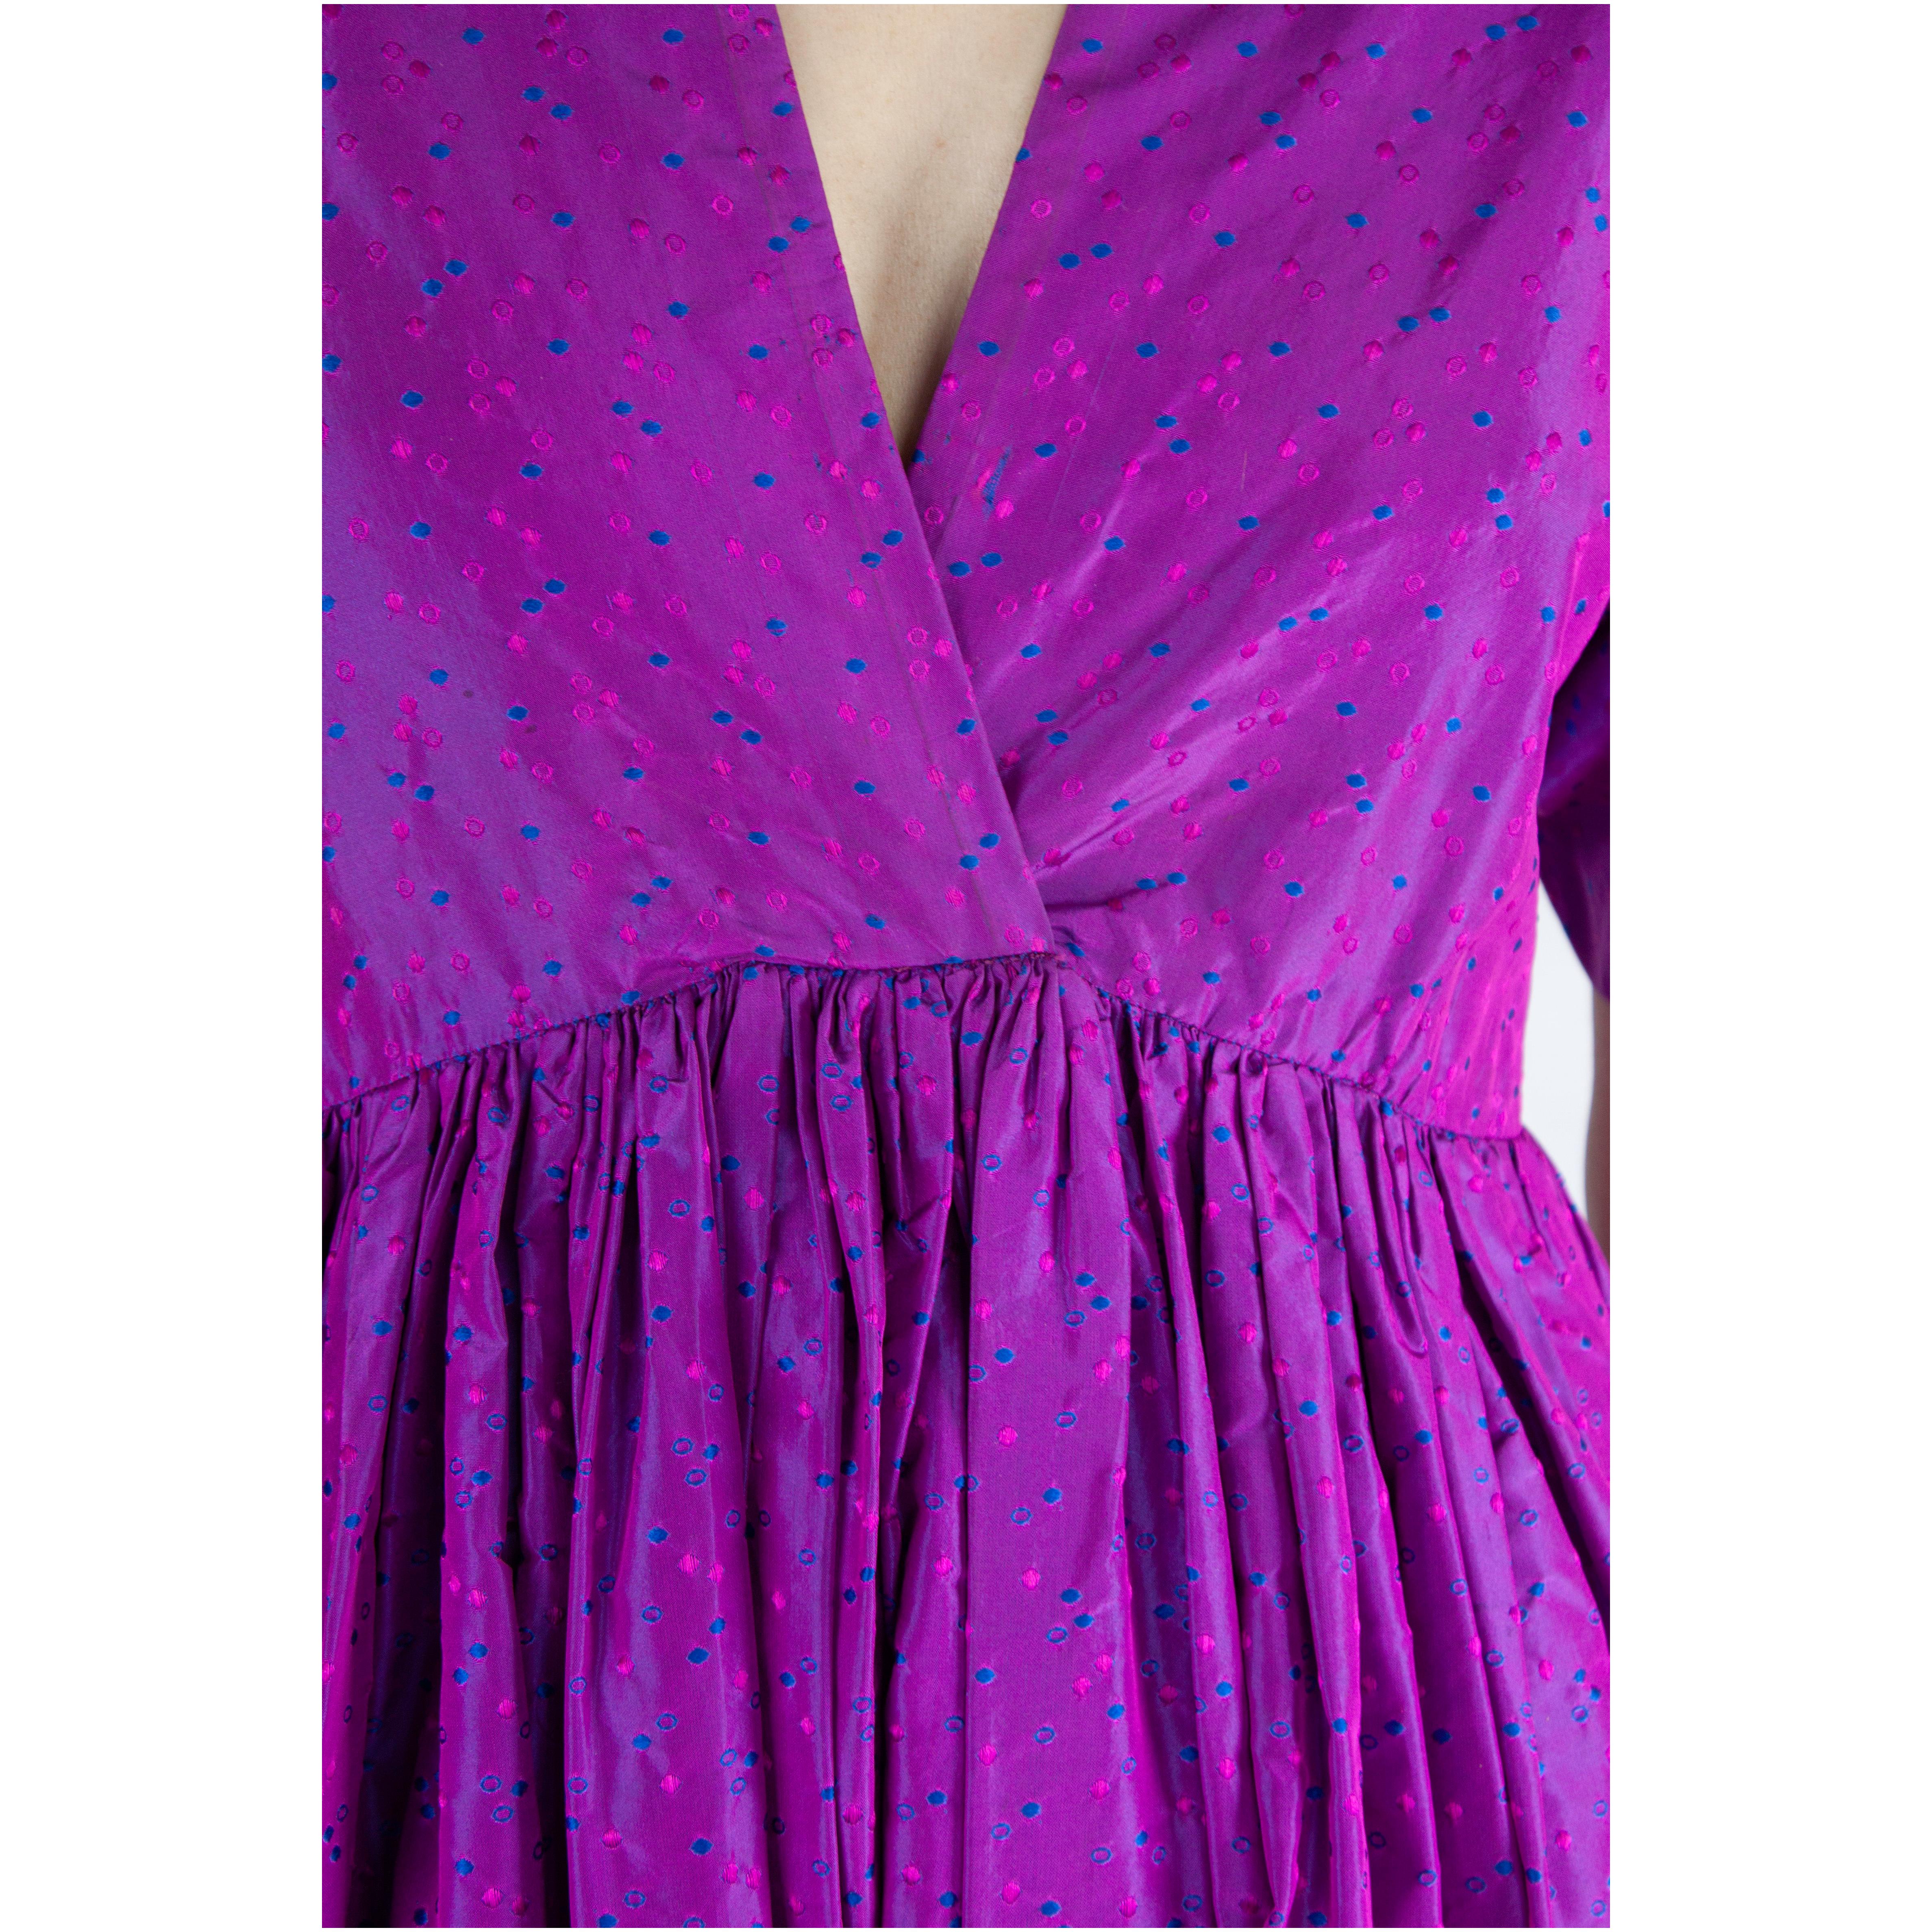 Unlabelled  Madame Grès iridescent lilac silk evening jumpsuit  circa 1970s For Sale 3